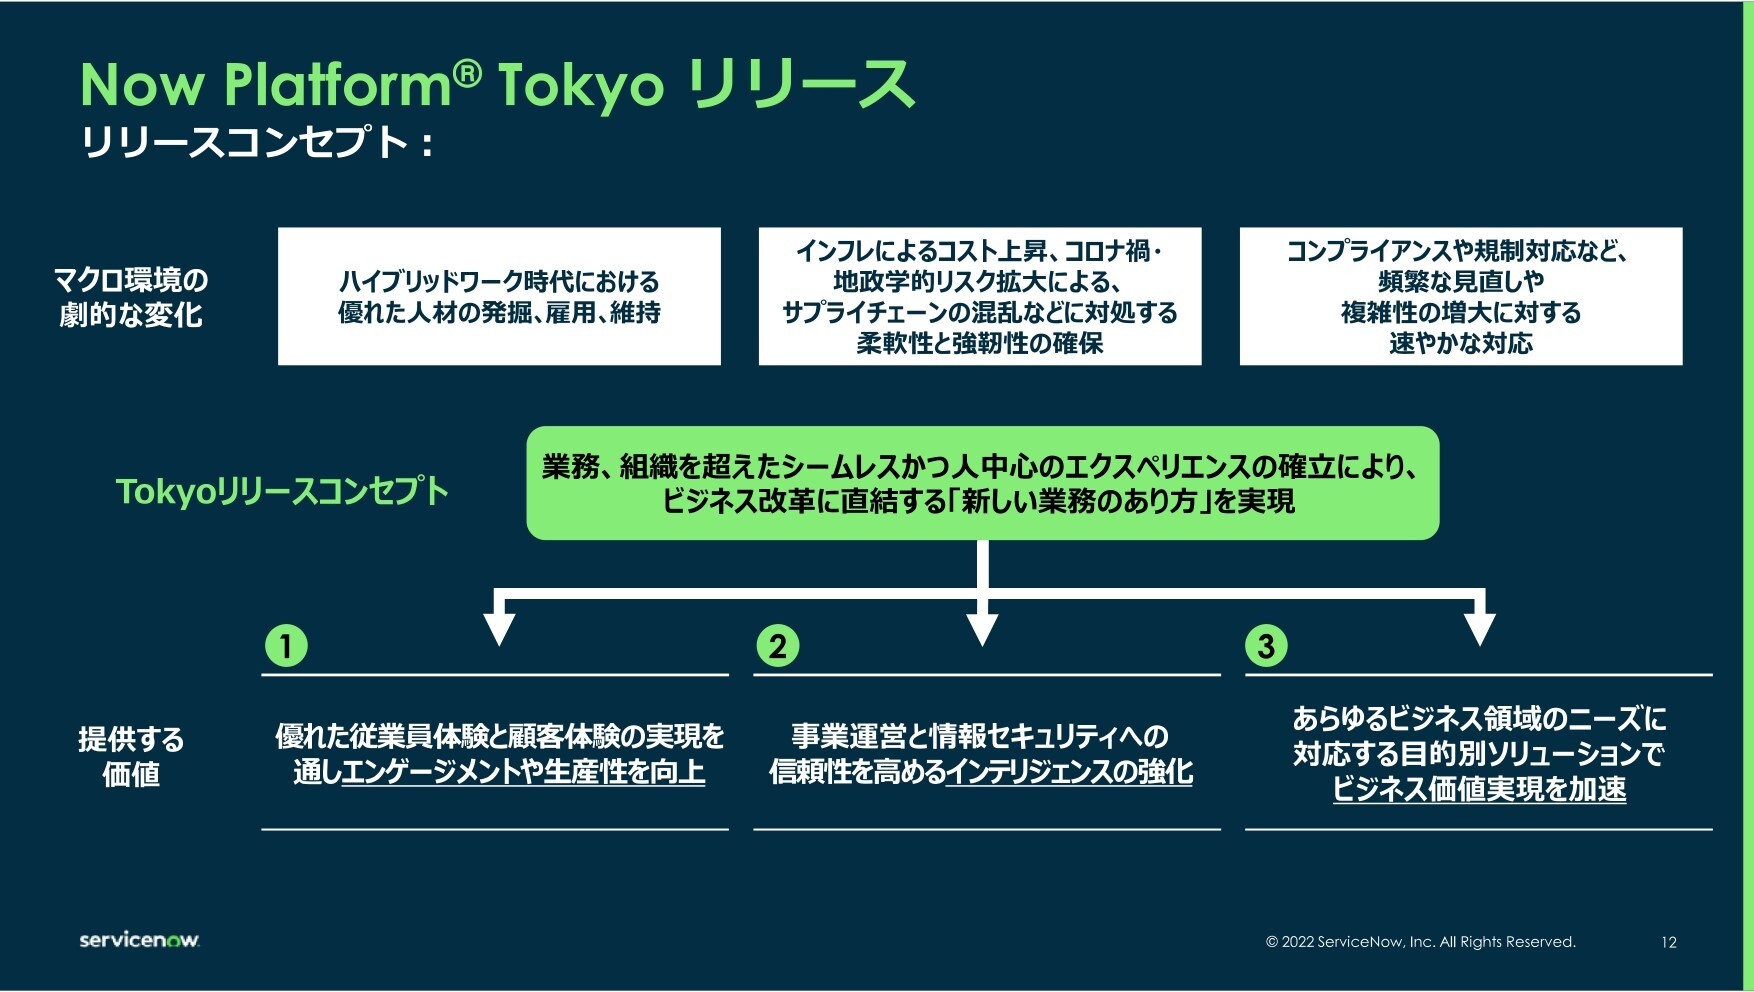 Now Platform Tokyoのリリースコンセプトと提供価値